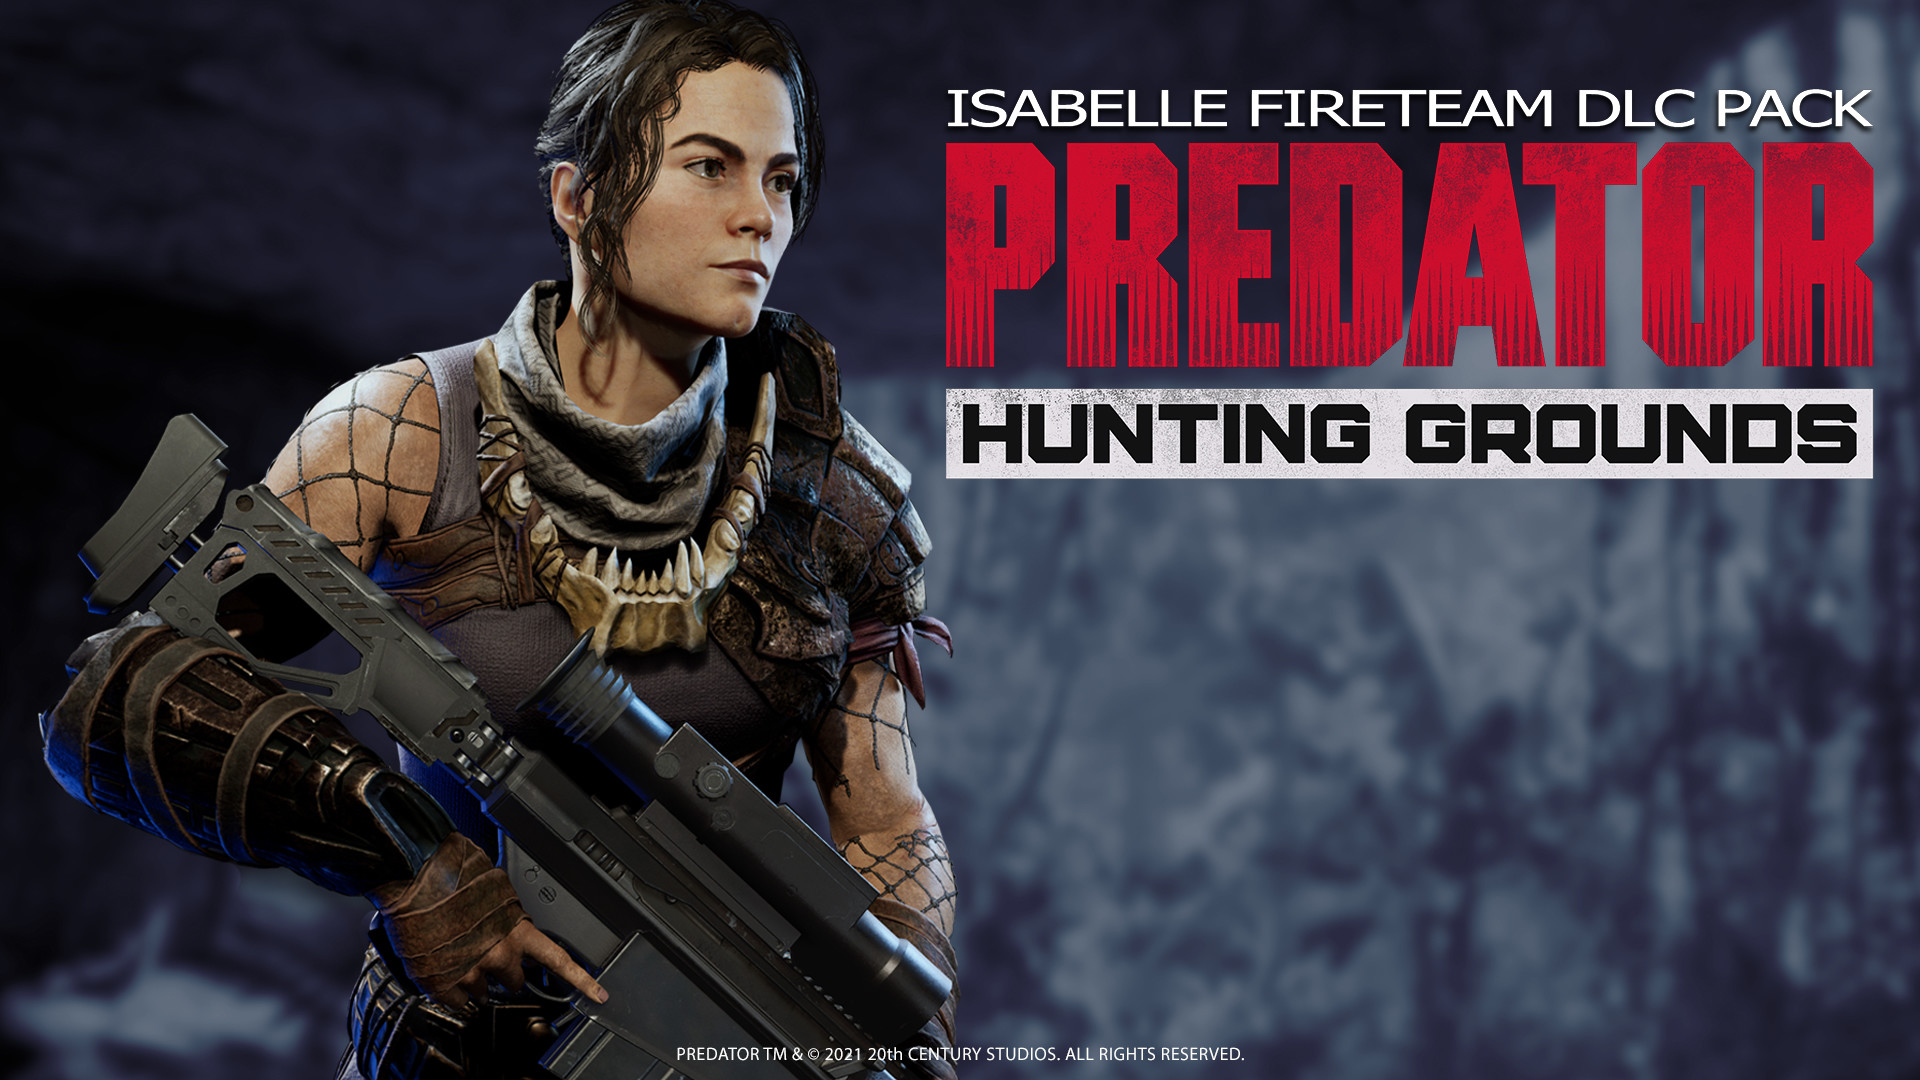 [$ 2.01] Predator: Hunting Grounds - Isabelle DLC Pack Steam CD Key